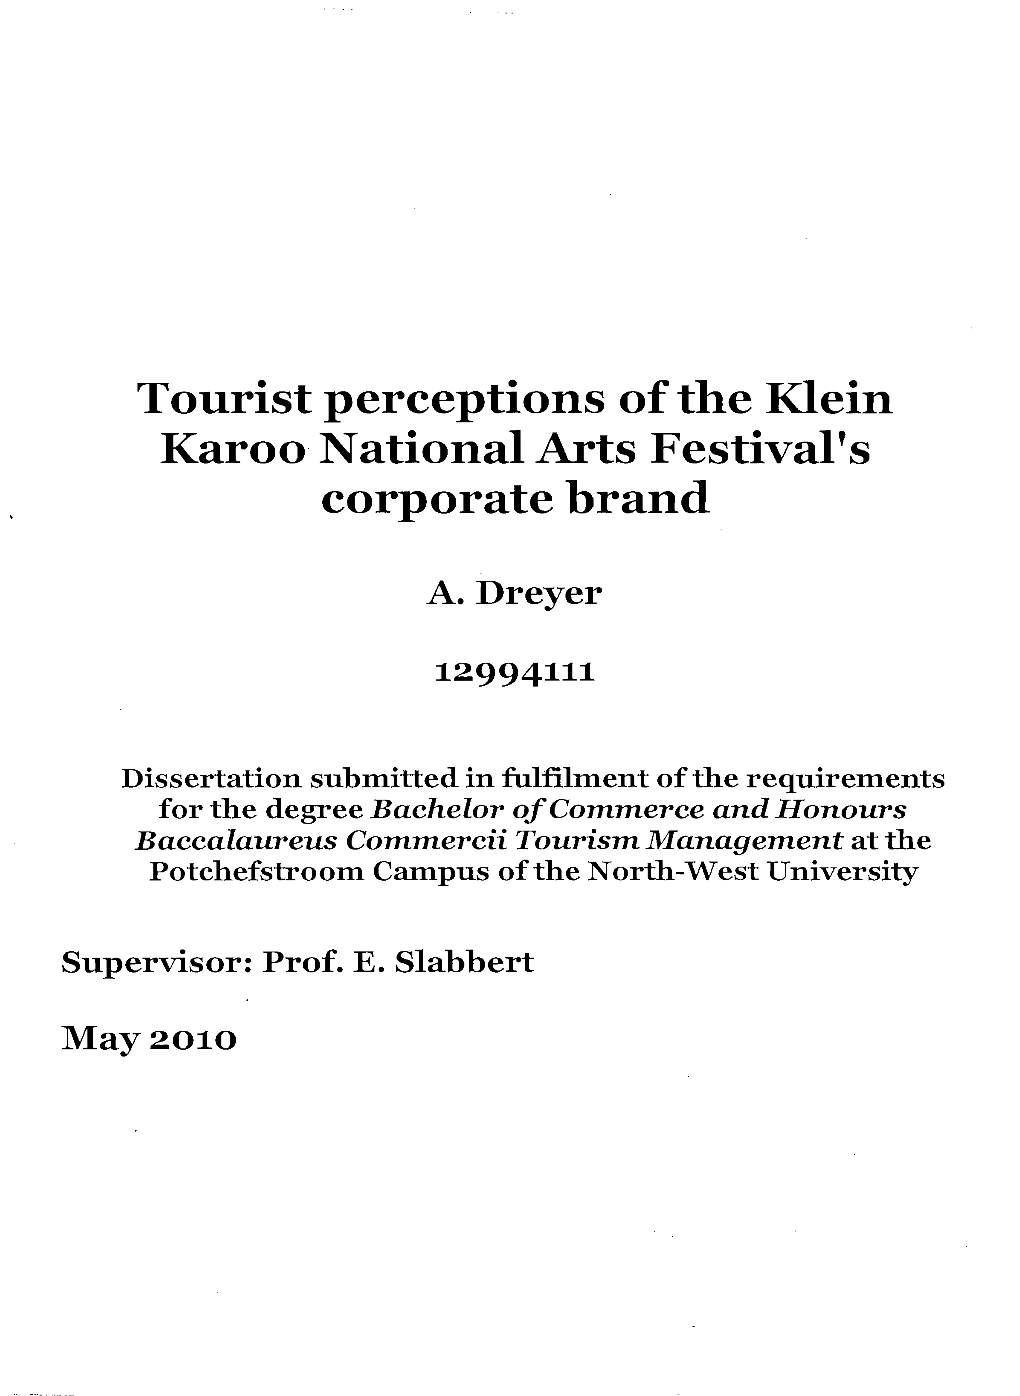 Tourist Perceptions Ofthe Klein Karoo National Arts Festival's Corporate Brand